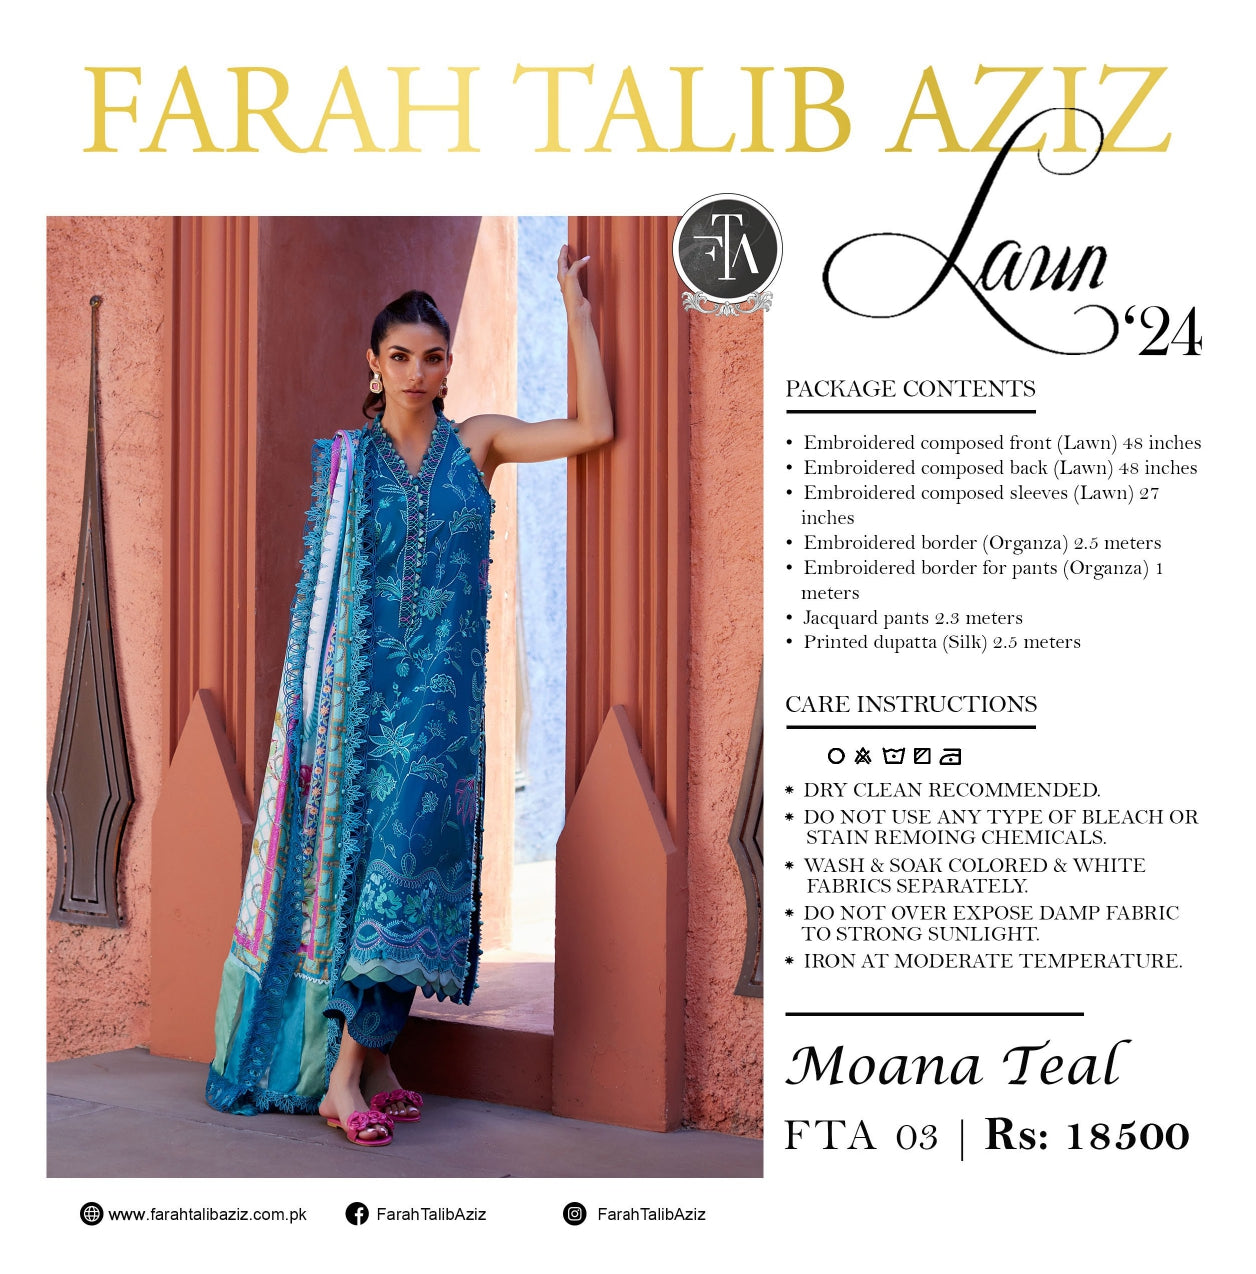 Farah Talib Aziz-24-03  MOANA TEAL